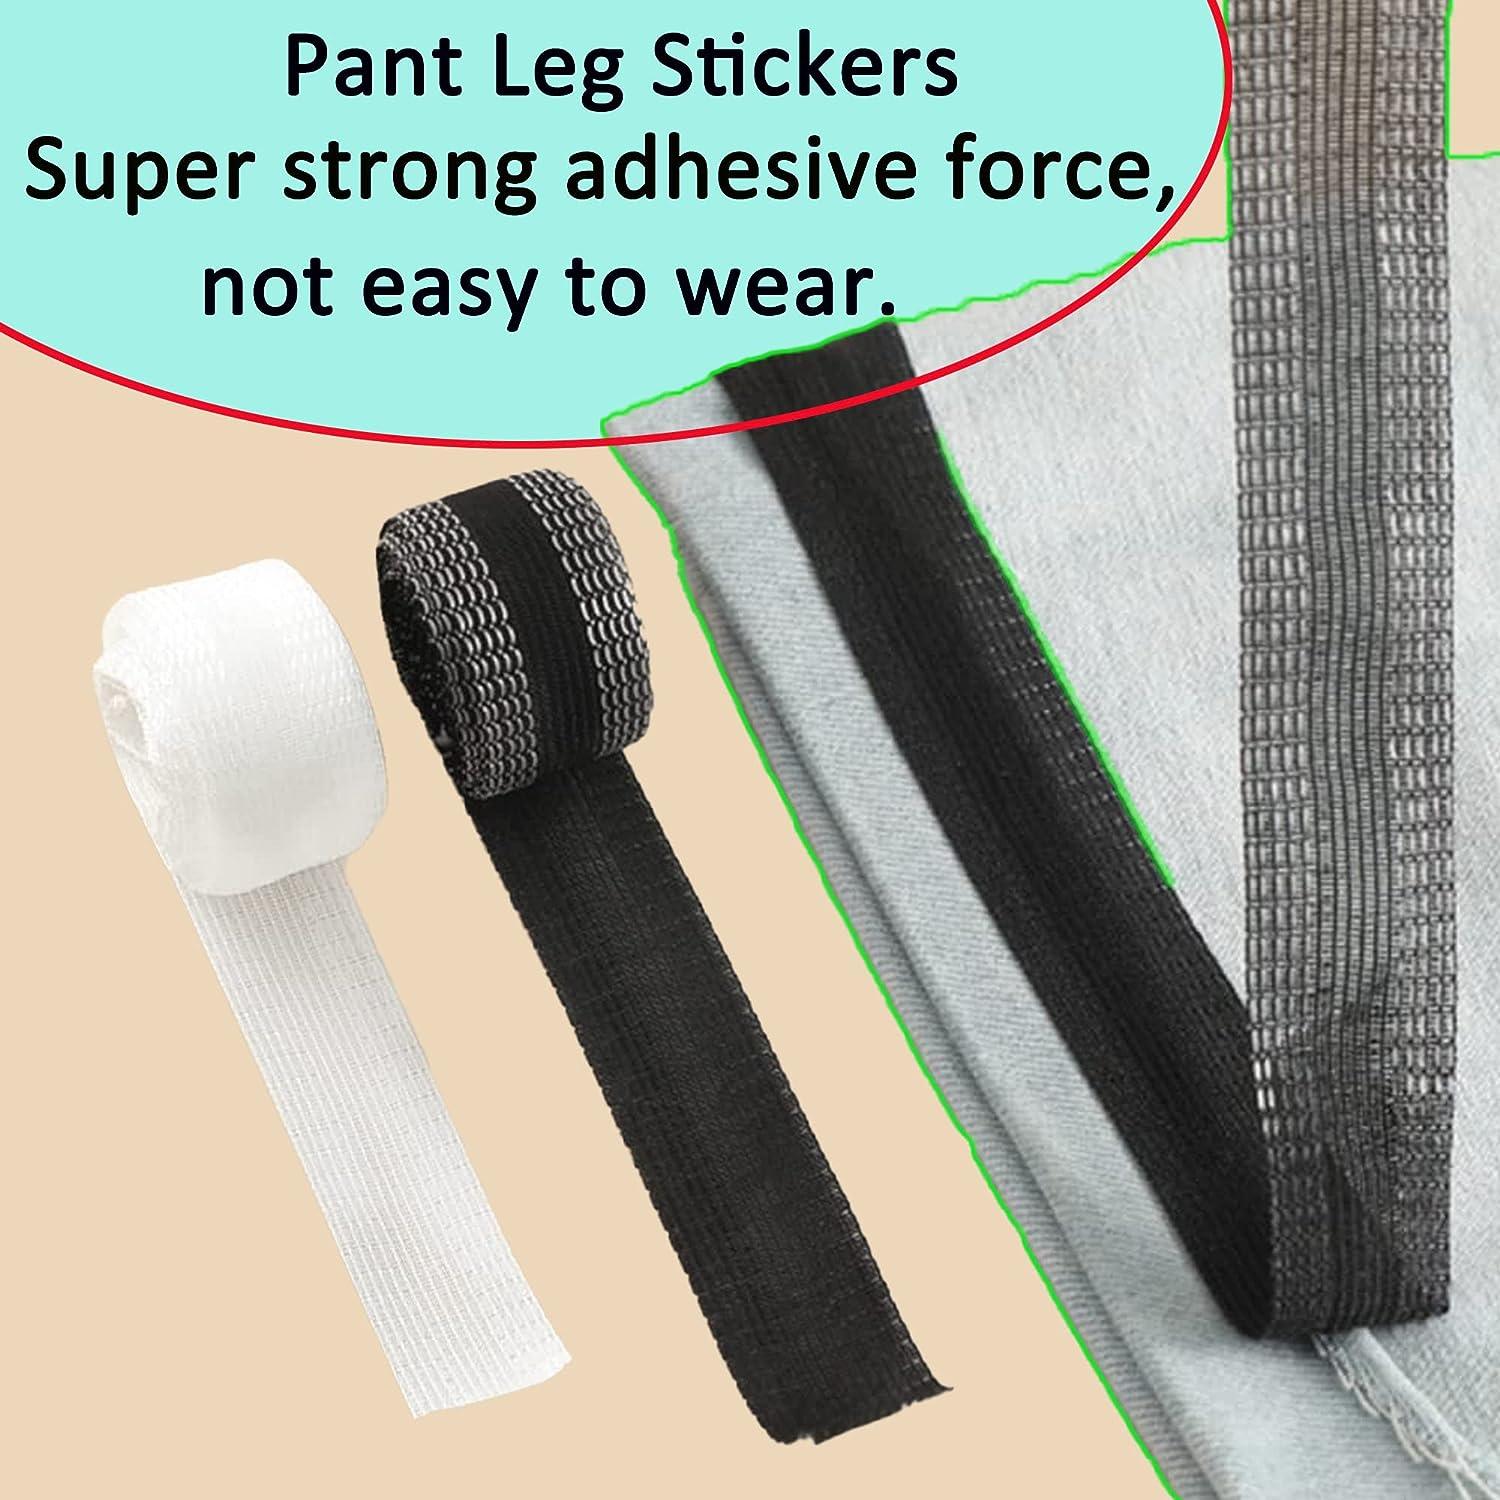 2 Pack Pants Edge Shorten Self-Adhesive Pant Mouth Paste, 8ft Iron